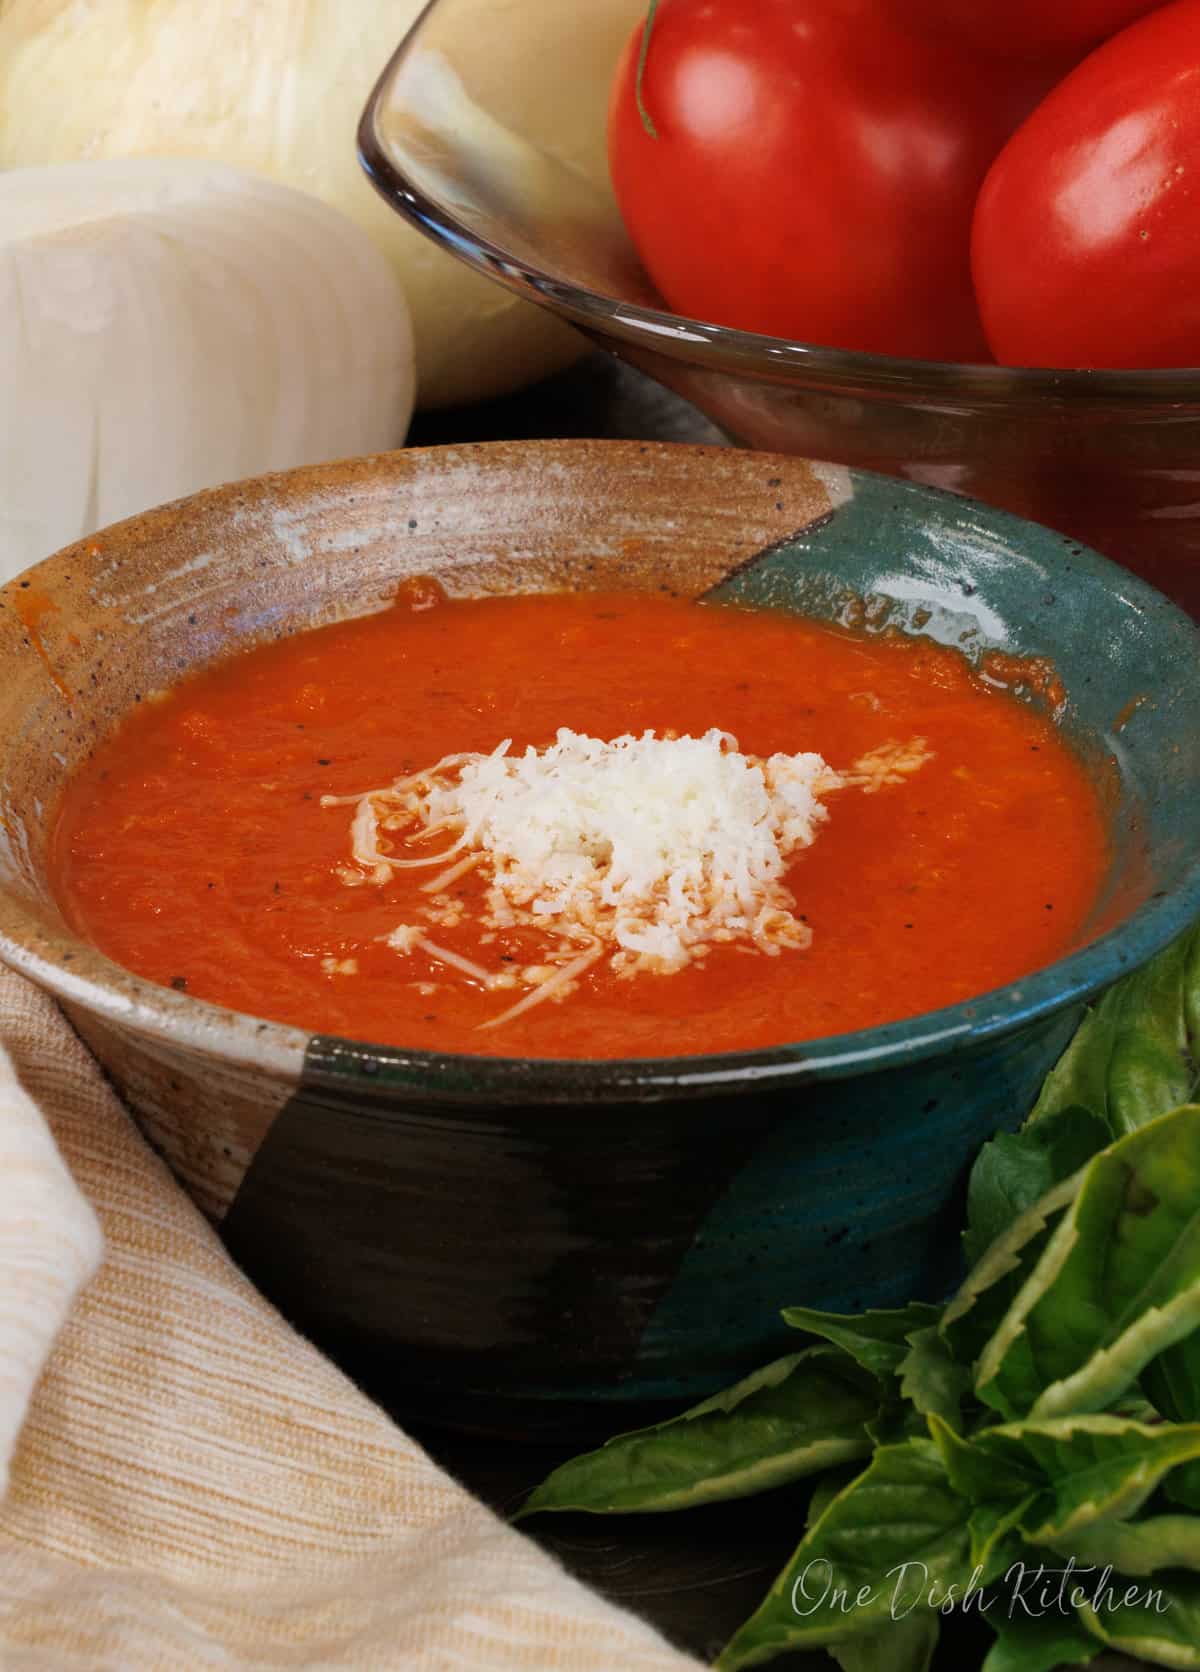 https://onedishkitchen.com/wp-content/uploads/2022/10/tomato-soup-one-dish-kitchen-1-1.jpg